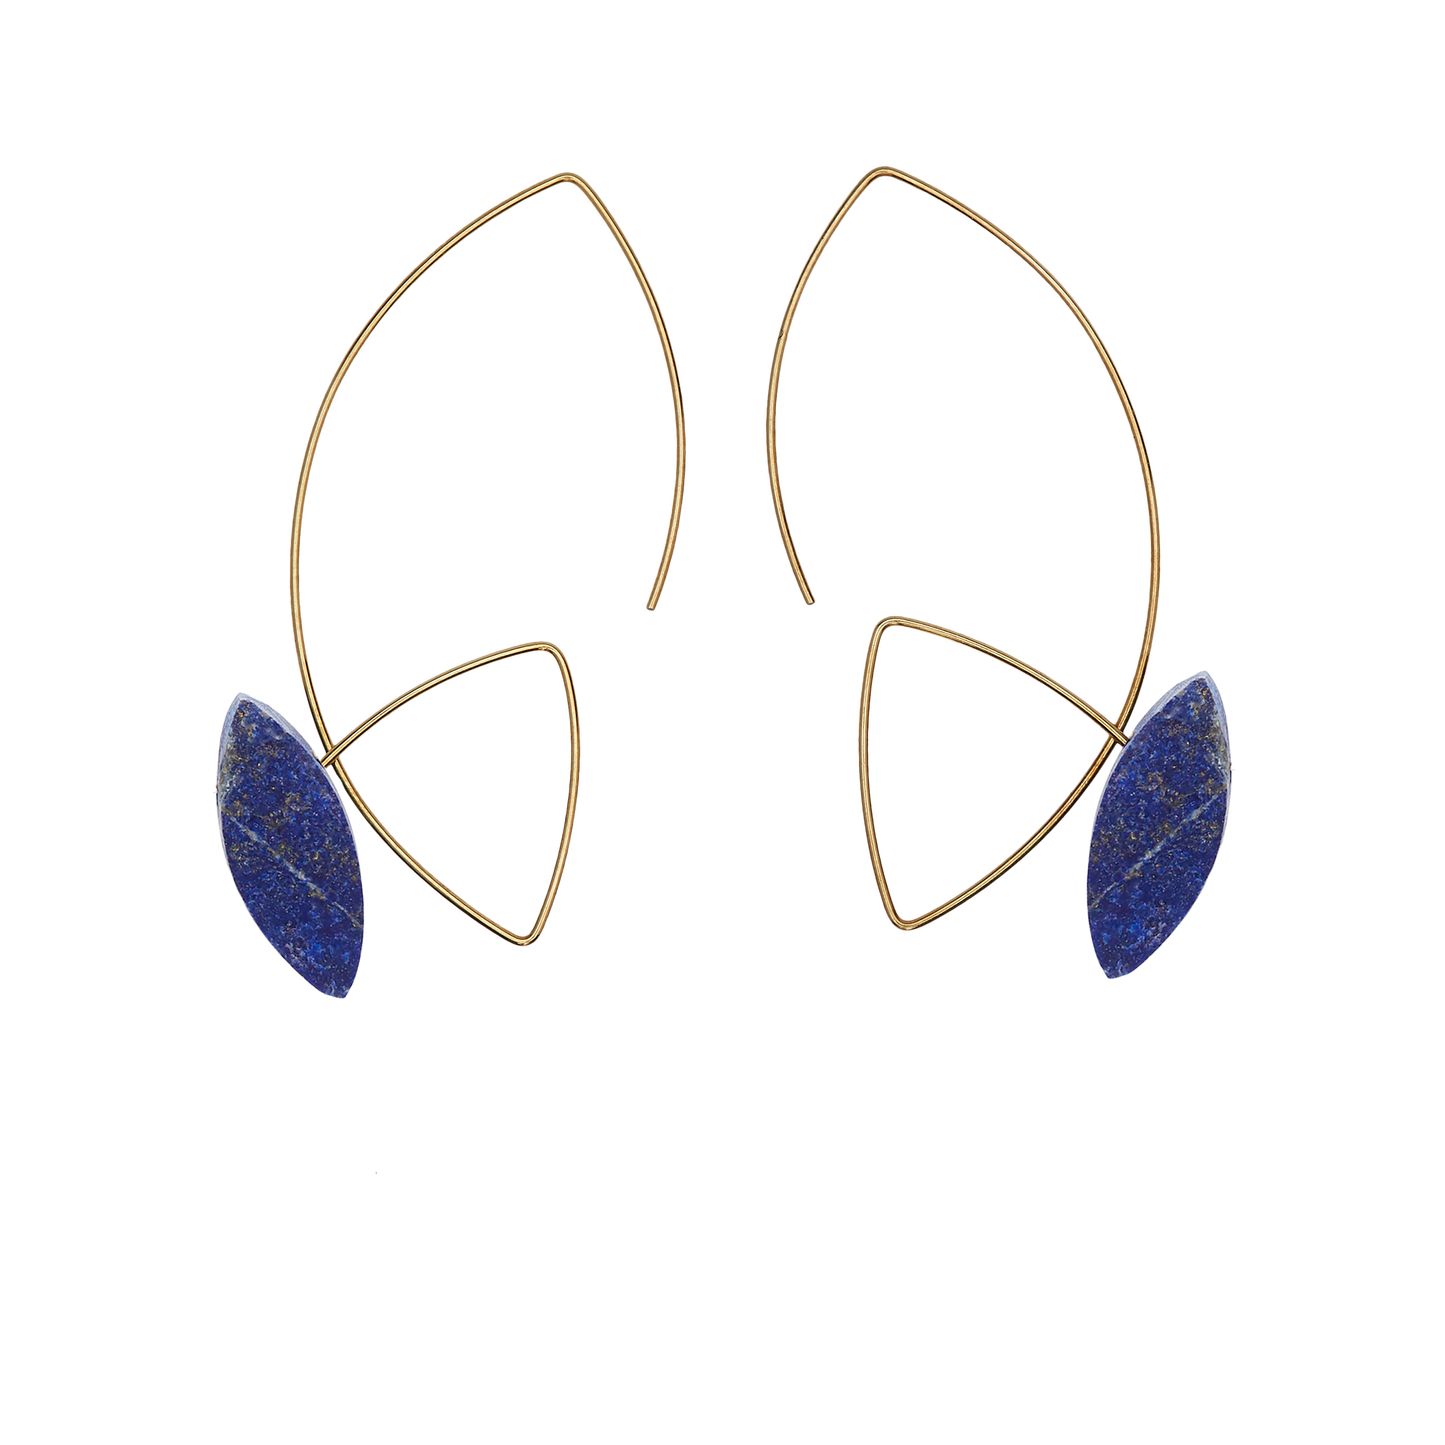 Large Angled Loop Earrings with Lapis Lazuli / Black Tourmaline